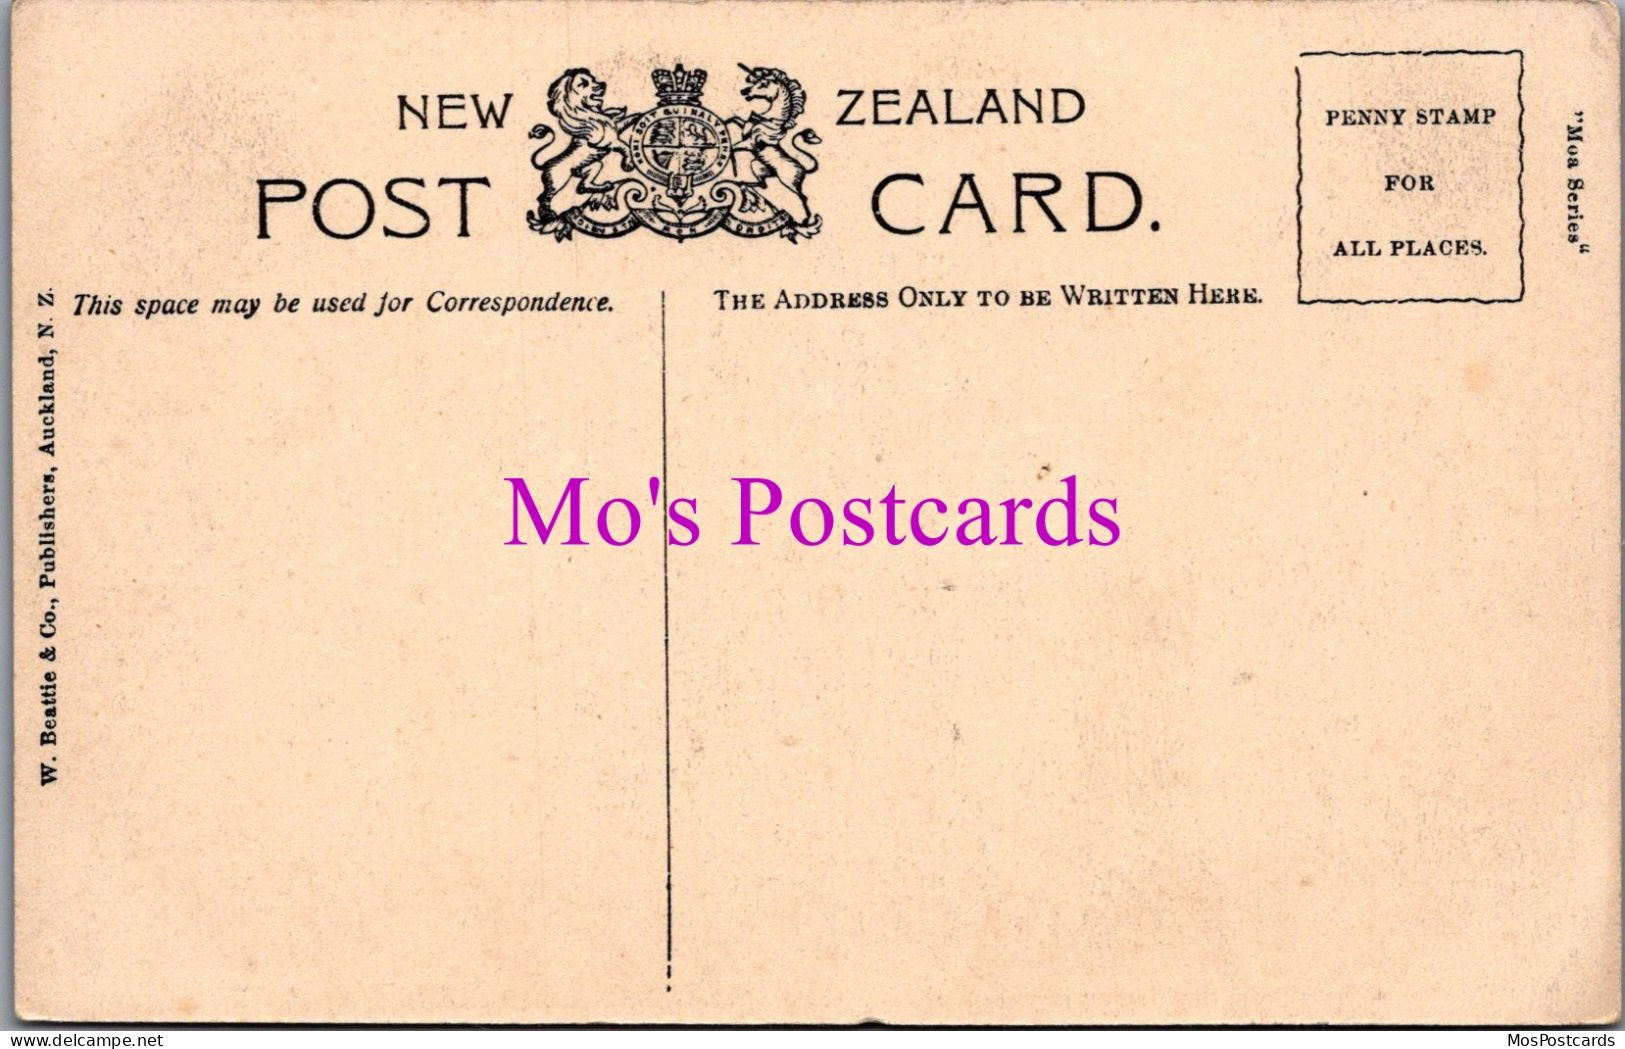 New Zealand Postcard - Ruakurl Caves, Waitomo  DZ264 - Neuseeland